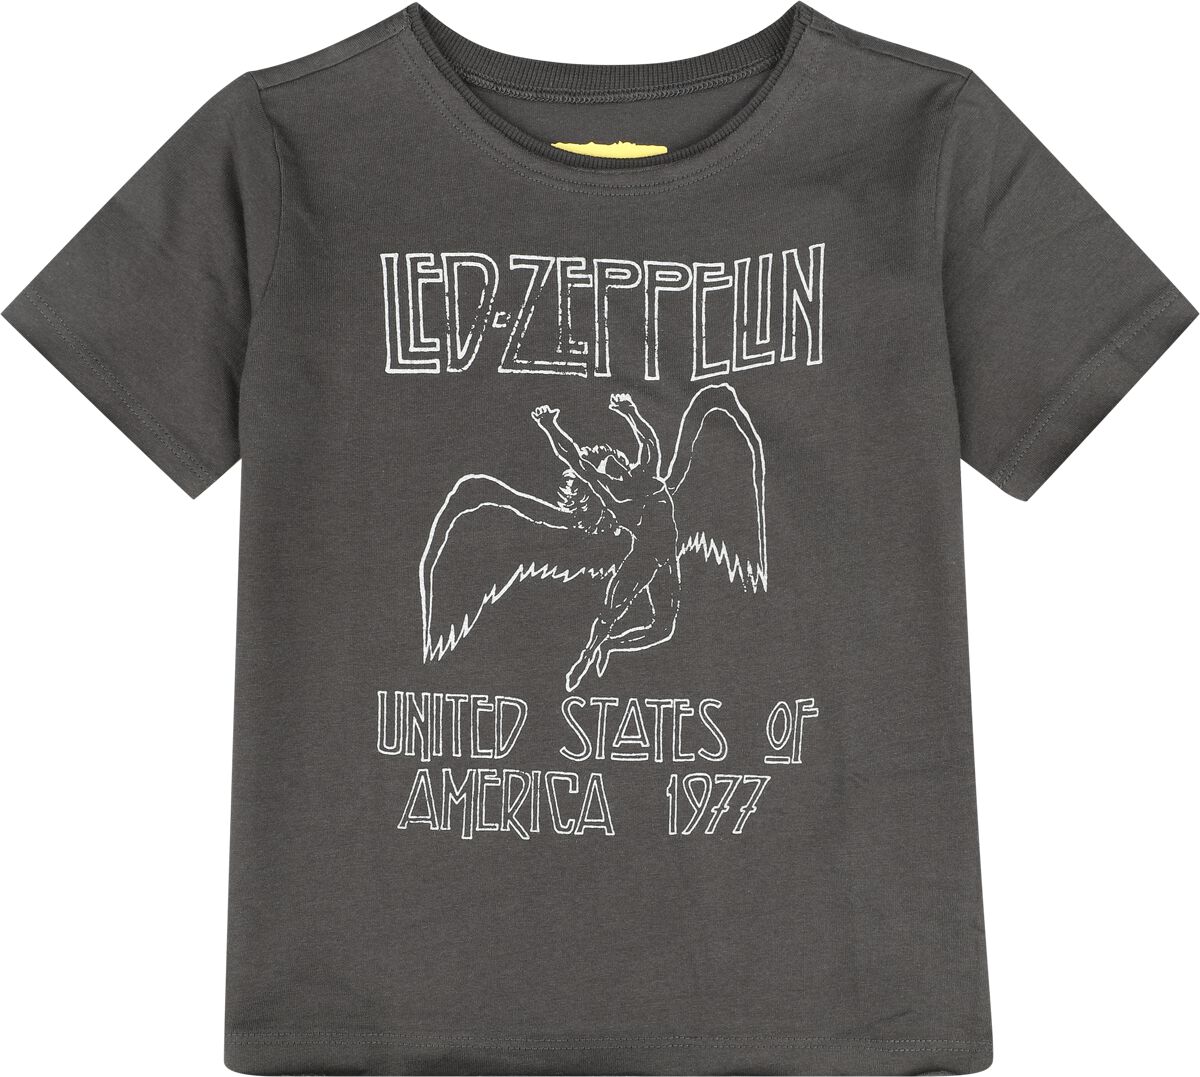 Led Zeppelin T-Shirt für Kinder - Amplified Collection - Kids - US 77 Tour - für Mädchen & Jungen - charcoal  - Lizenziertes Merchandise!